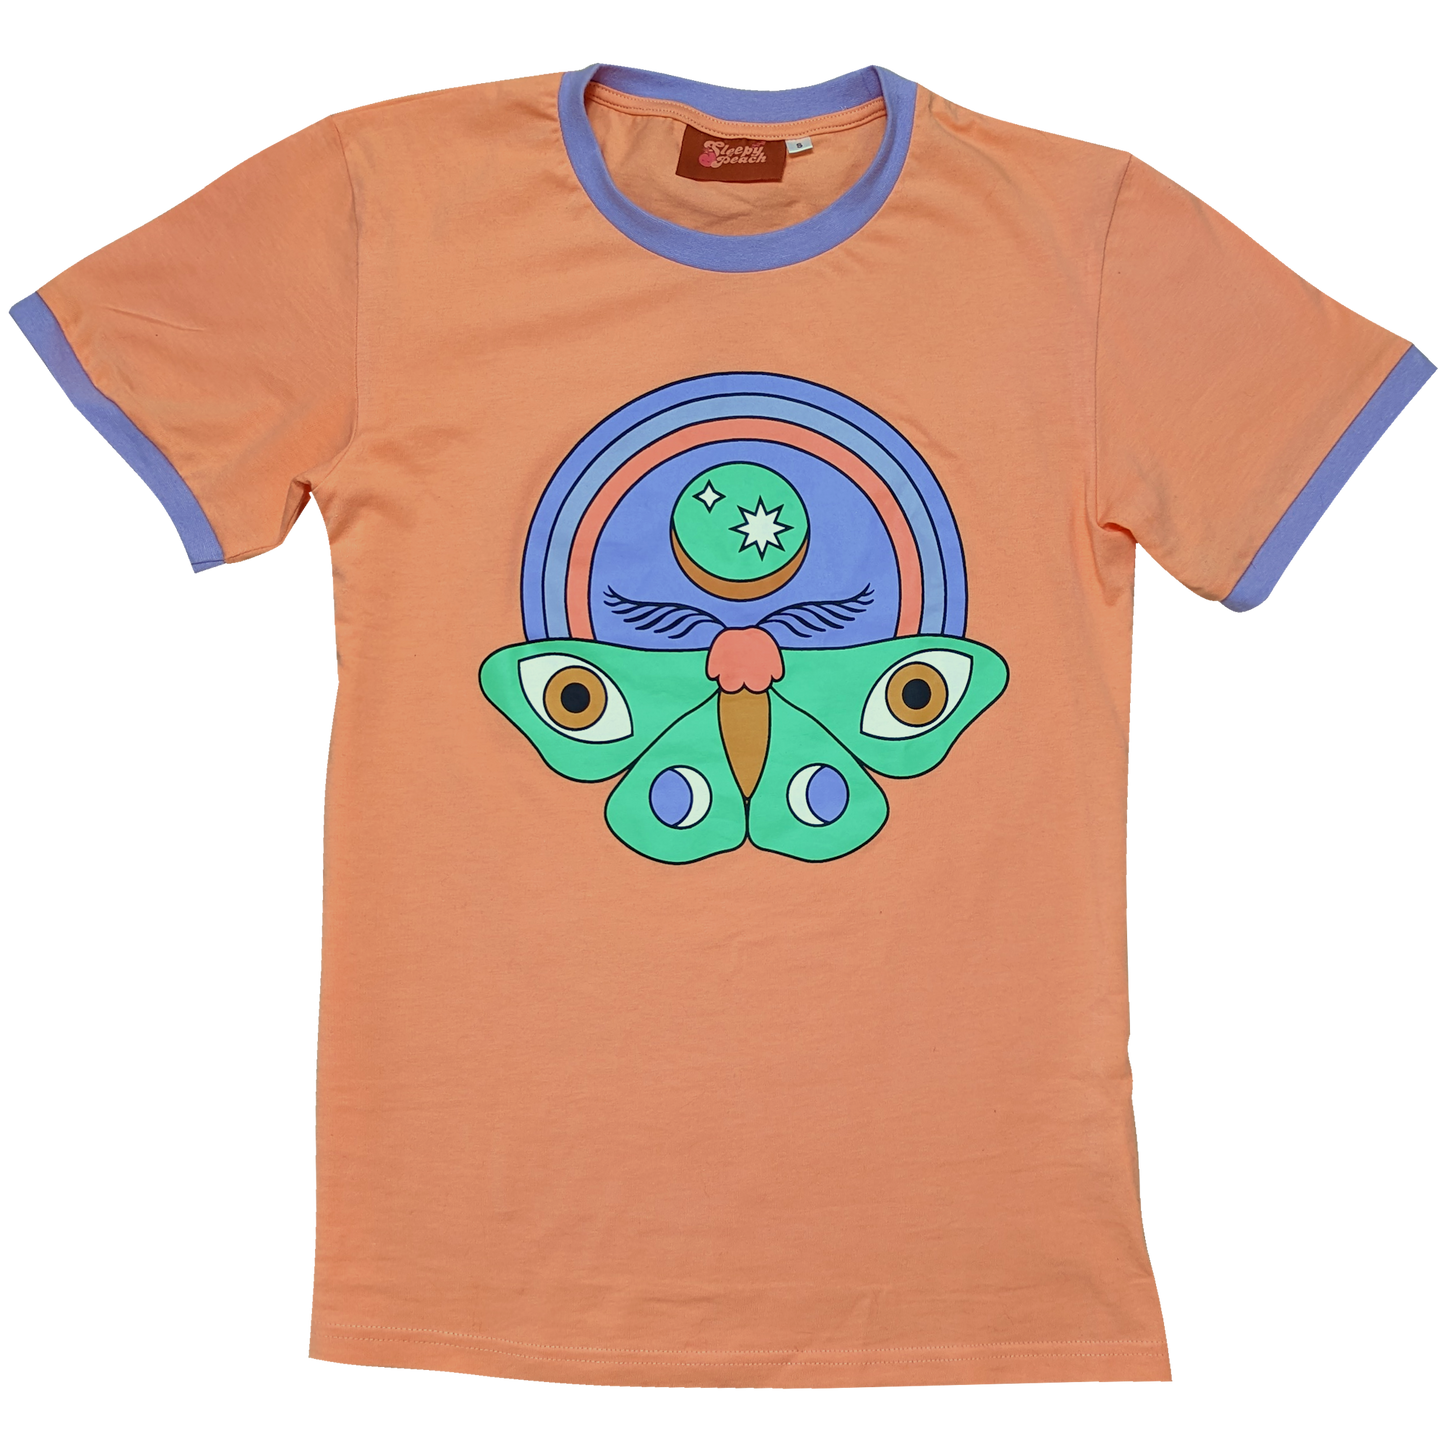 The Cosmic Moth Shirt - Sleepy Peach